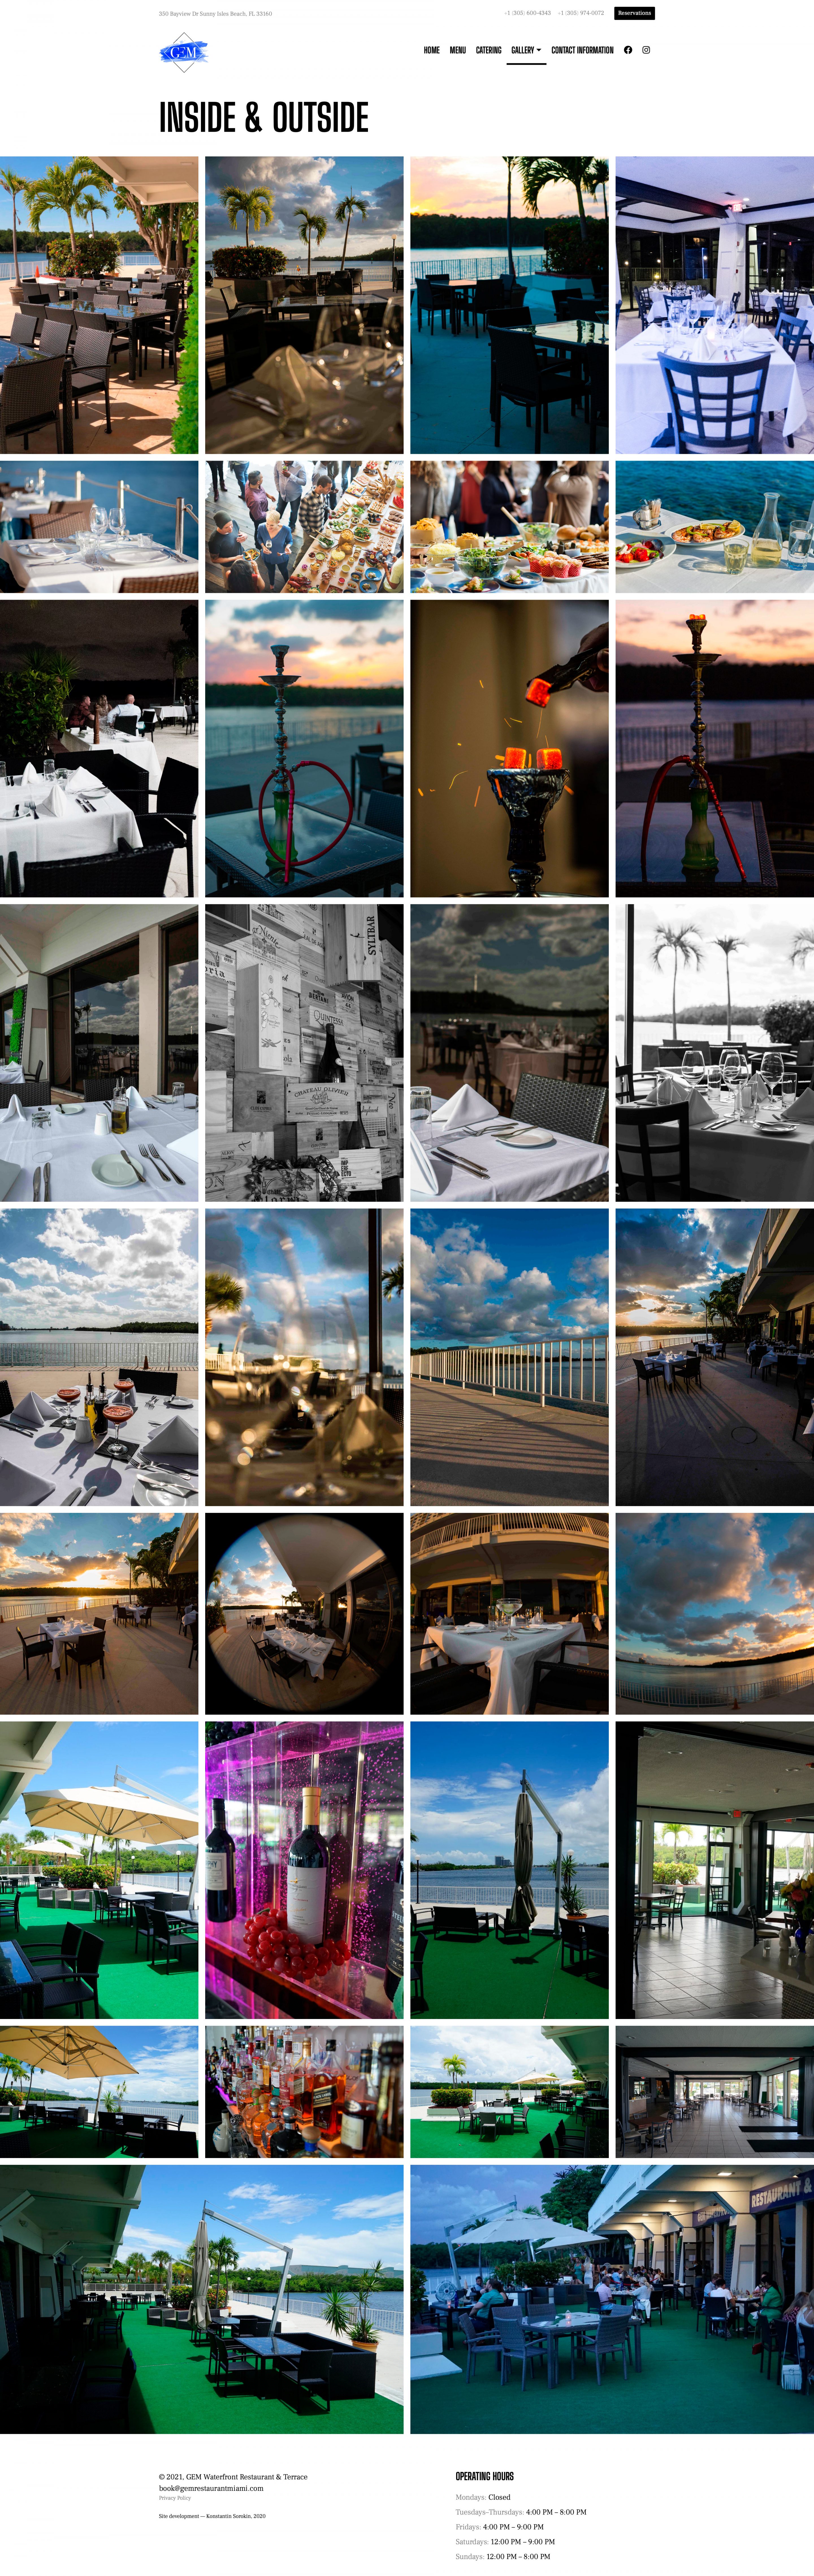 GEM Waterfront Restaurant & Terrace